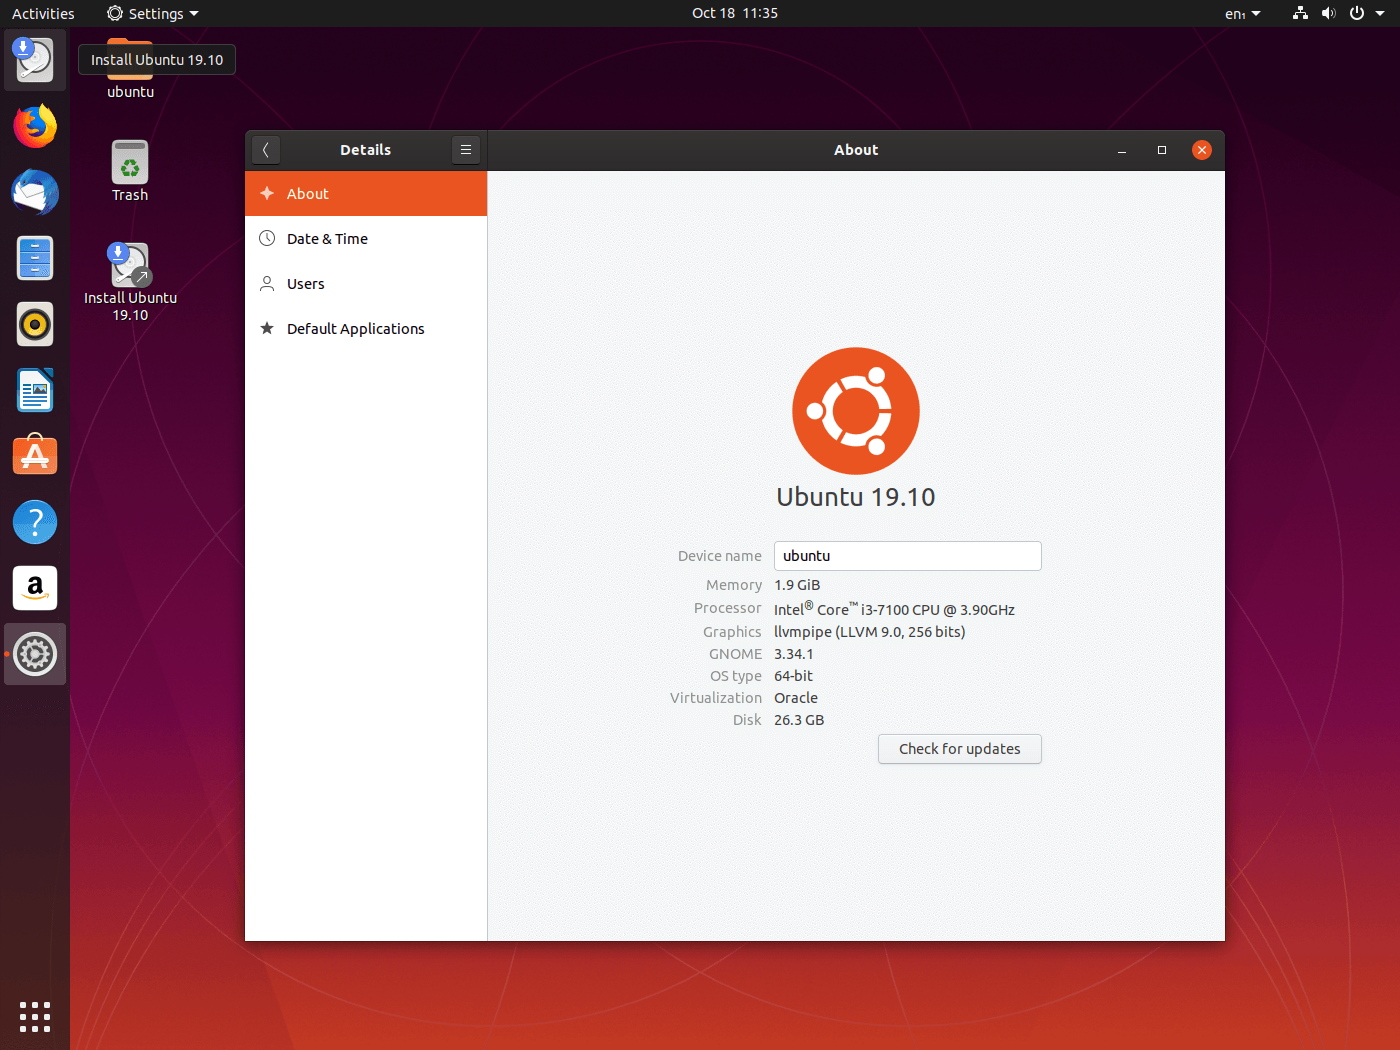 free download ubuntu 14.04 64 bit iso image